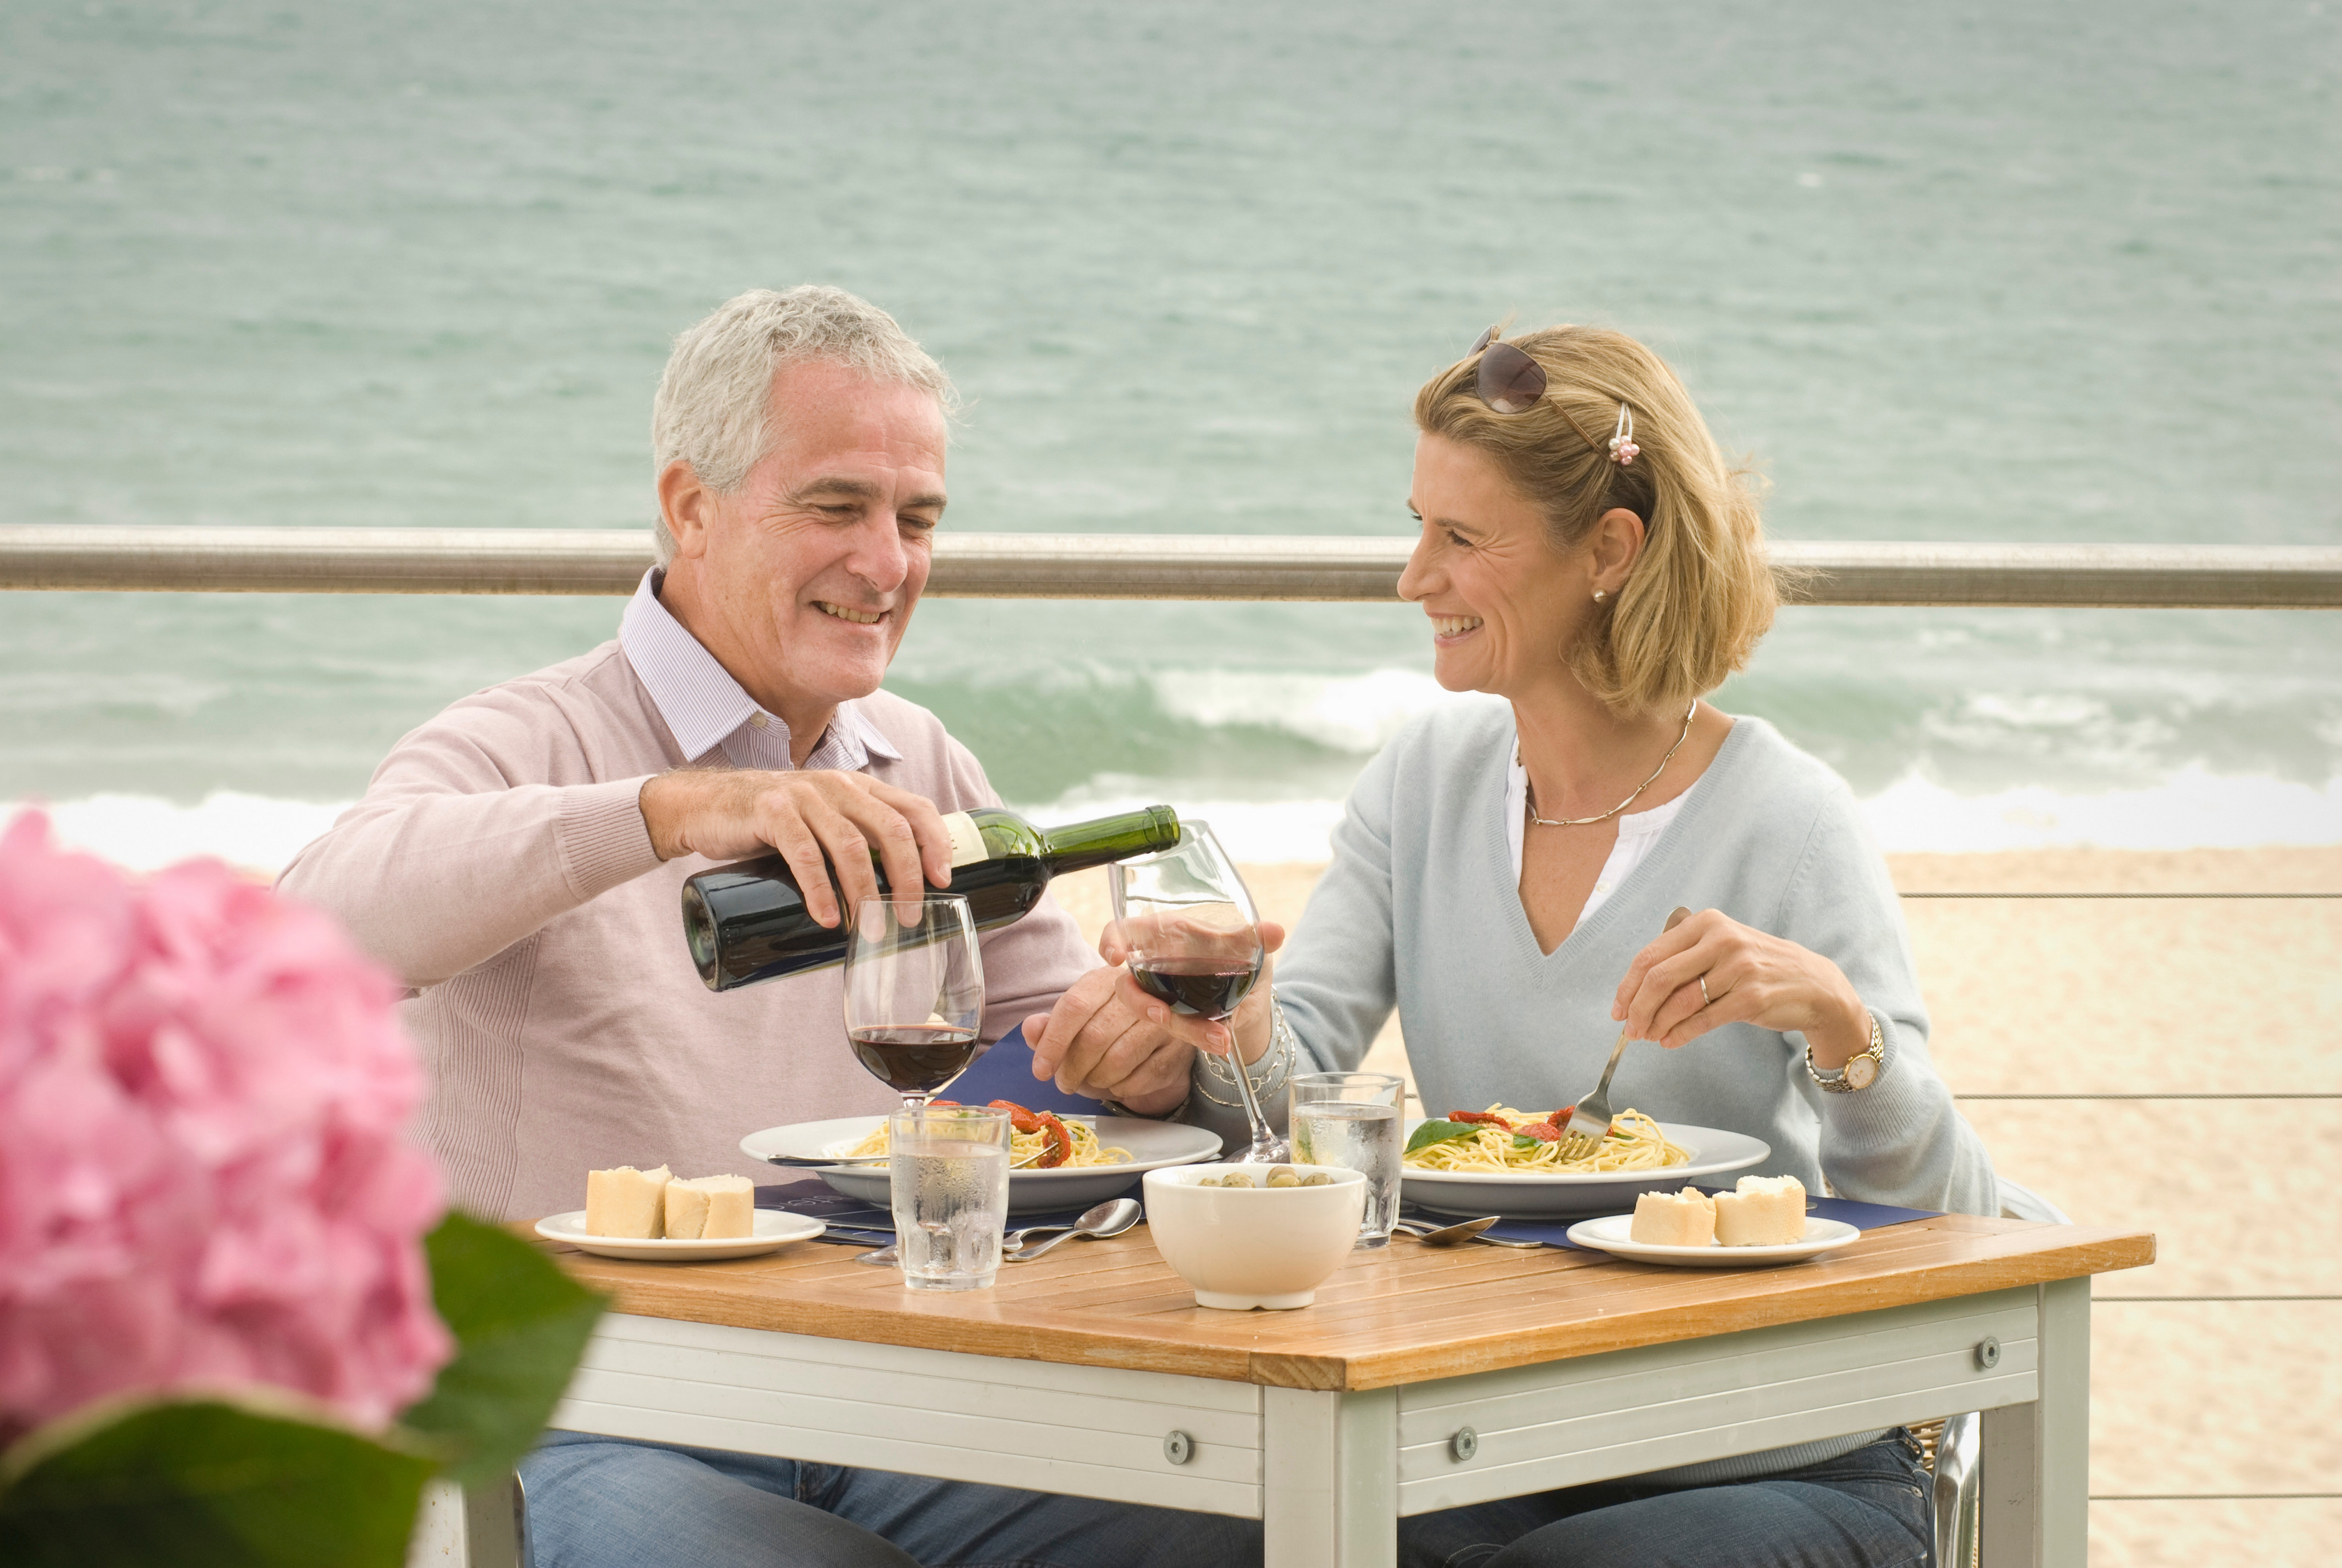 couple-dining-at-seaside-restaurant-2022-03-08-00-23-48-utc